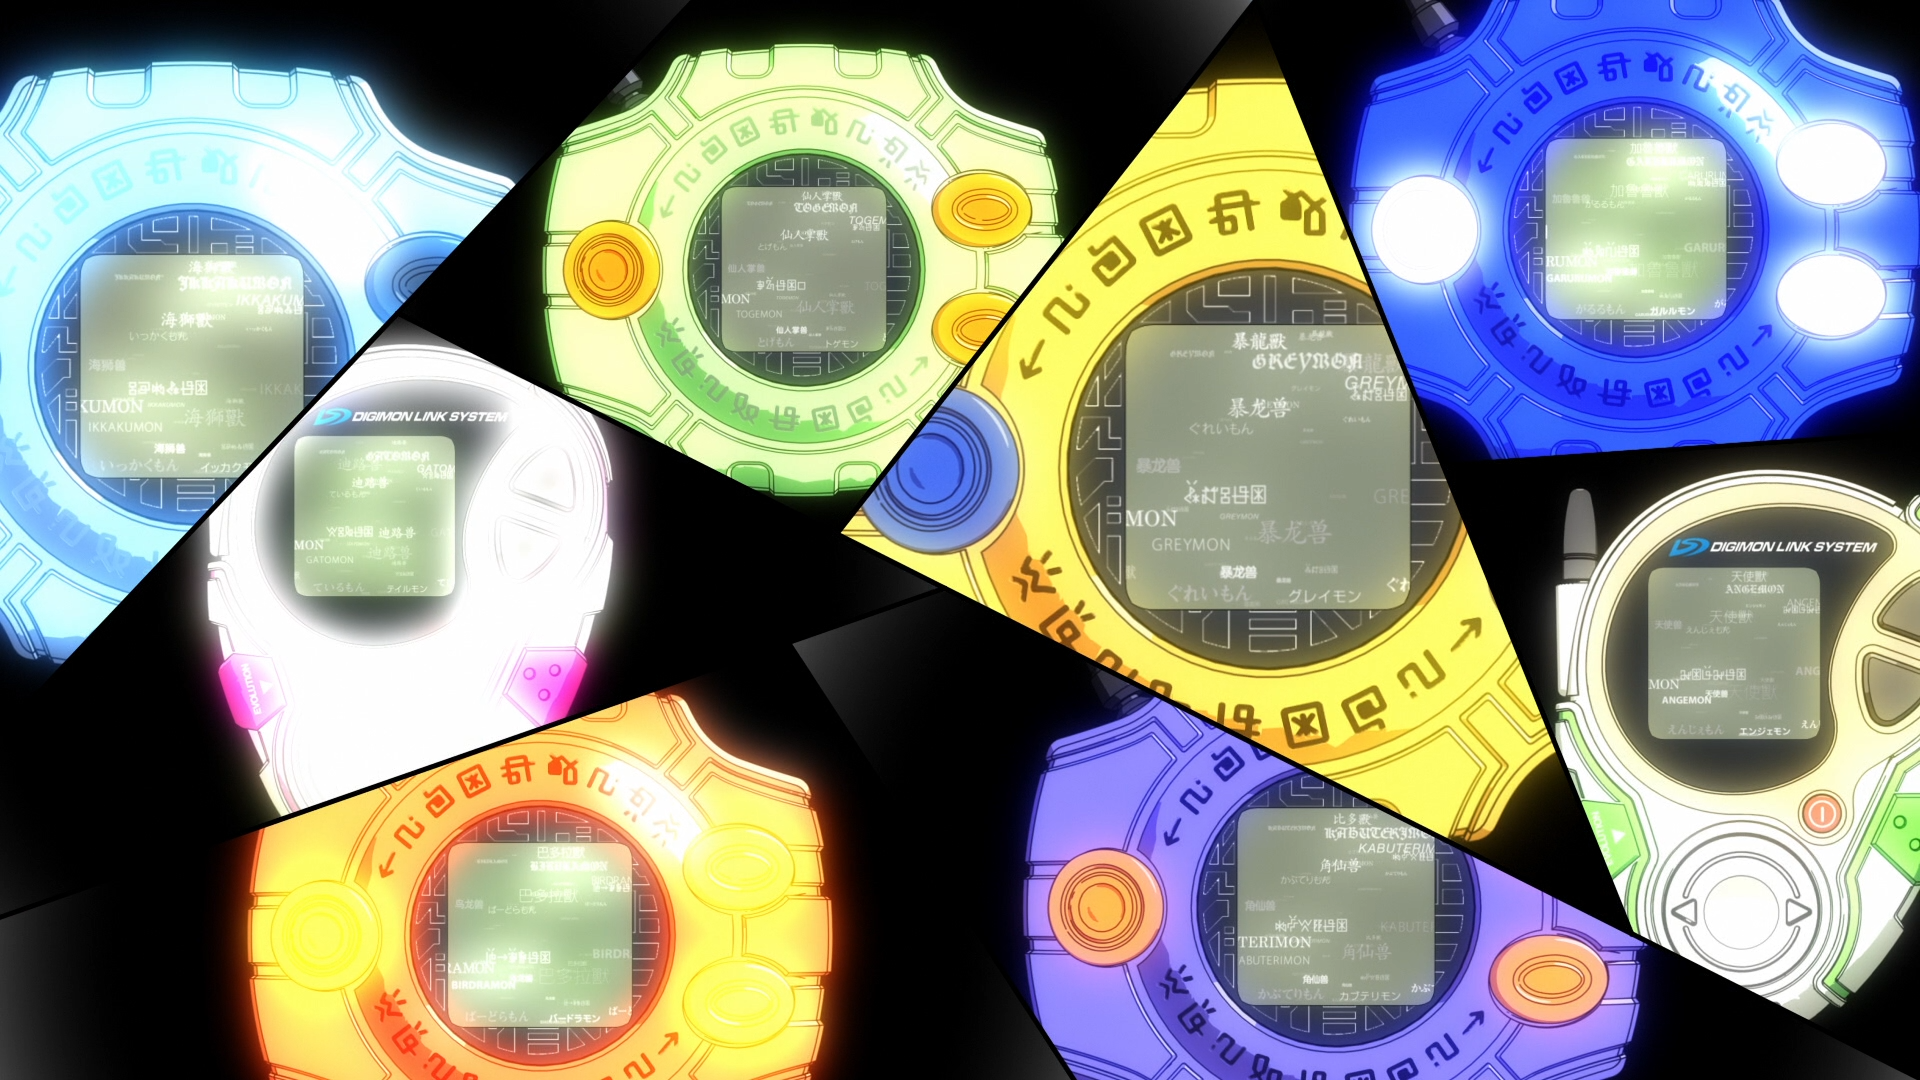 Digimon Adventure Tri. Part 5: Coexistence ( Digimon Adventure tri. 5:  KyÃ´sei ) [ NON-USA FORMAT, PAL, Reg.4 Import - Australia ]